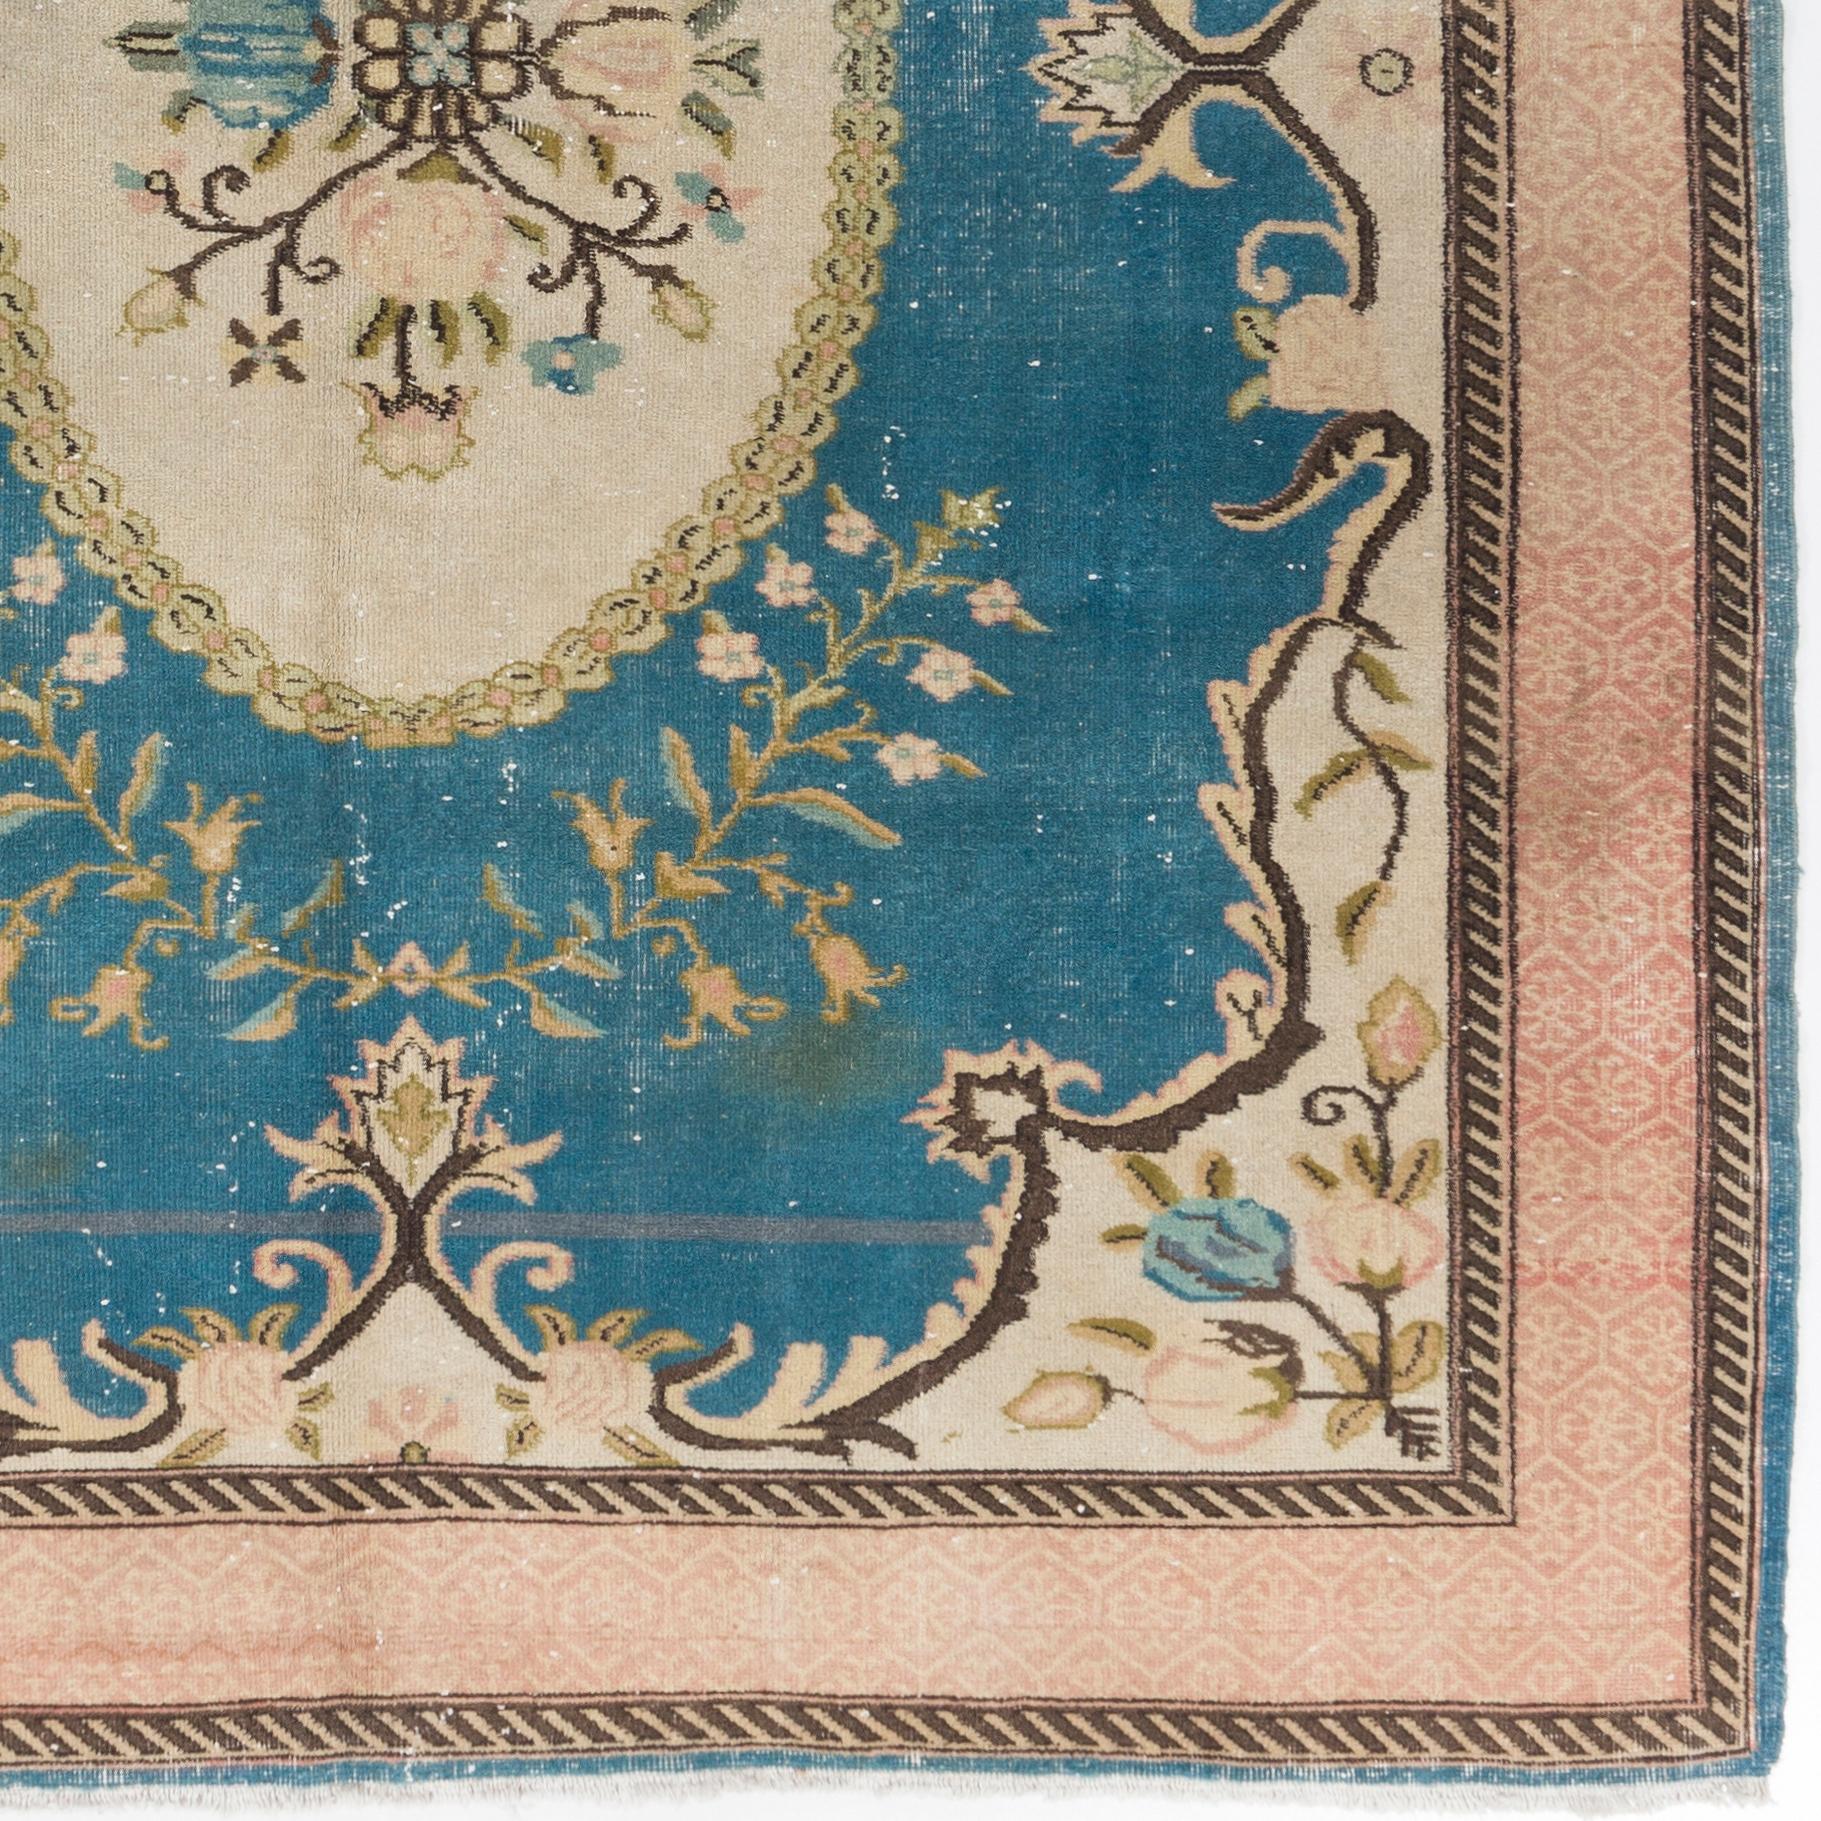 Aubusson 7x9.5 Ft Decorative Hand-Knotted Area Rug. Vintage European Design Wool Carpet For Sale